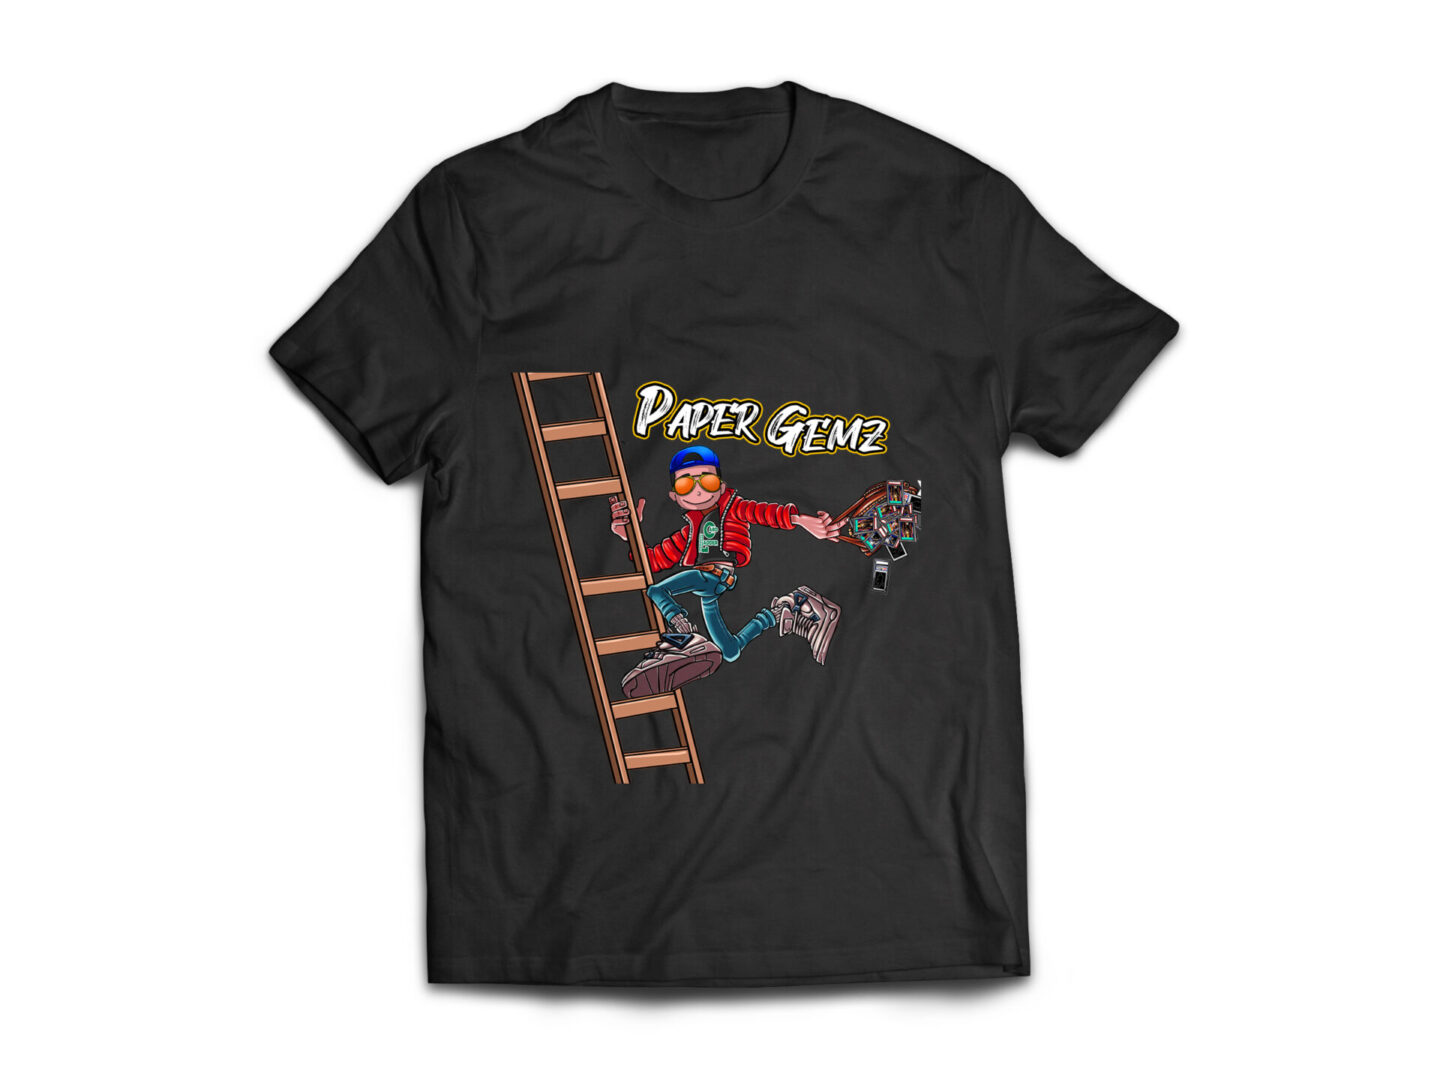 Black Card Ladder T shirt by Paper Gemz